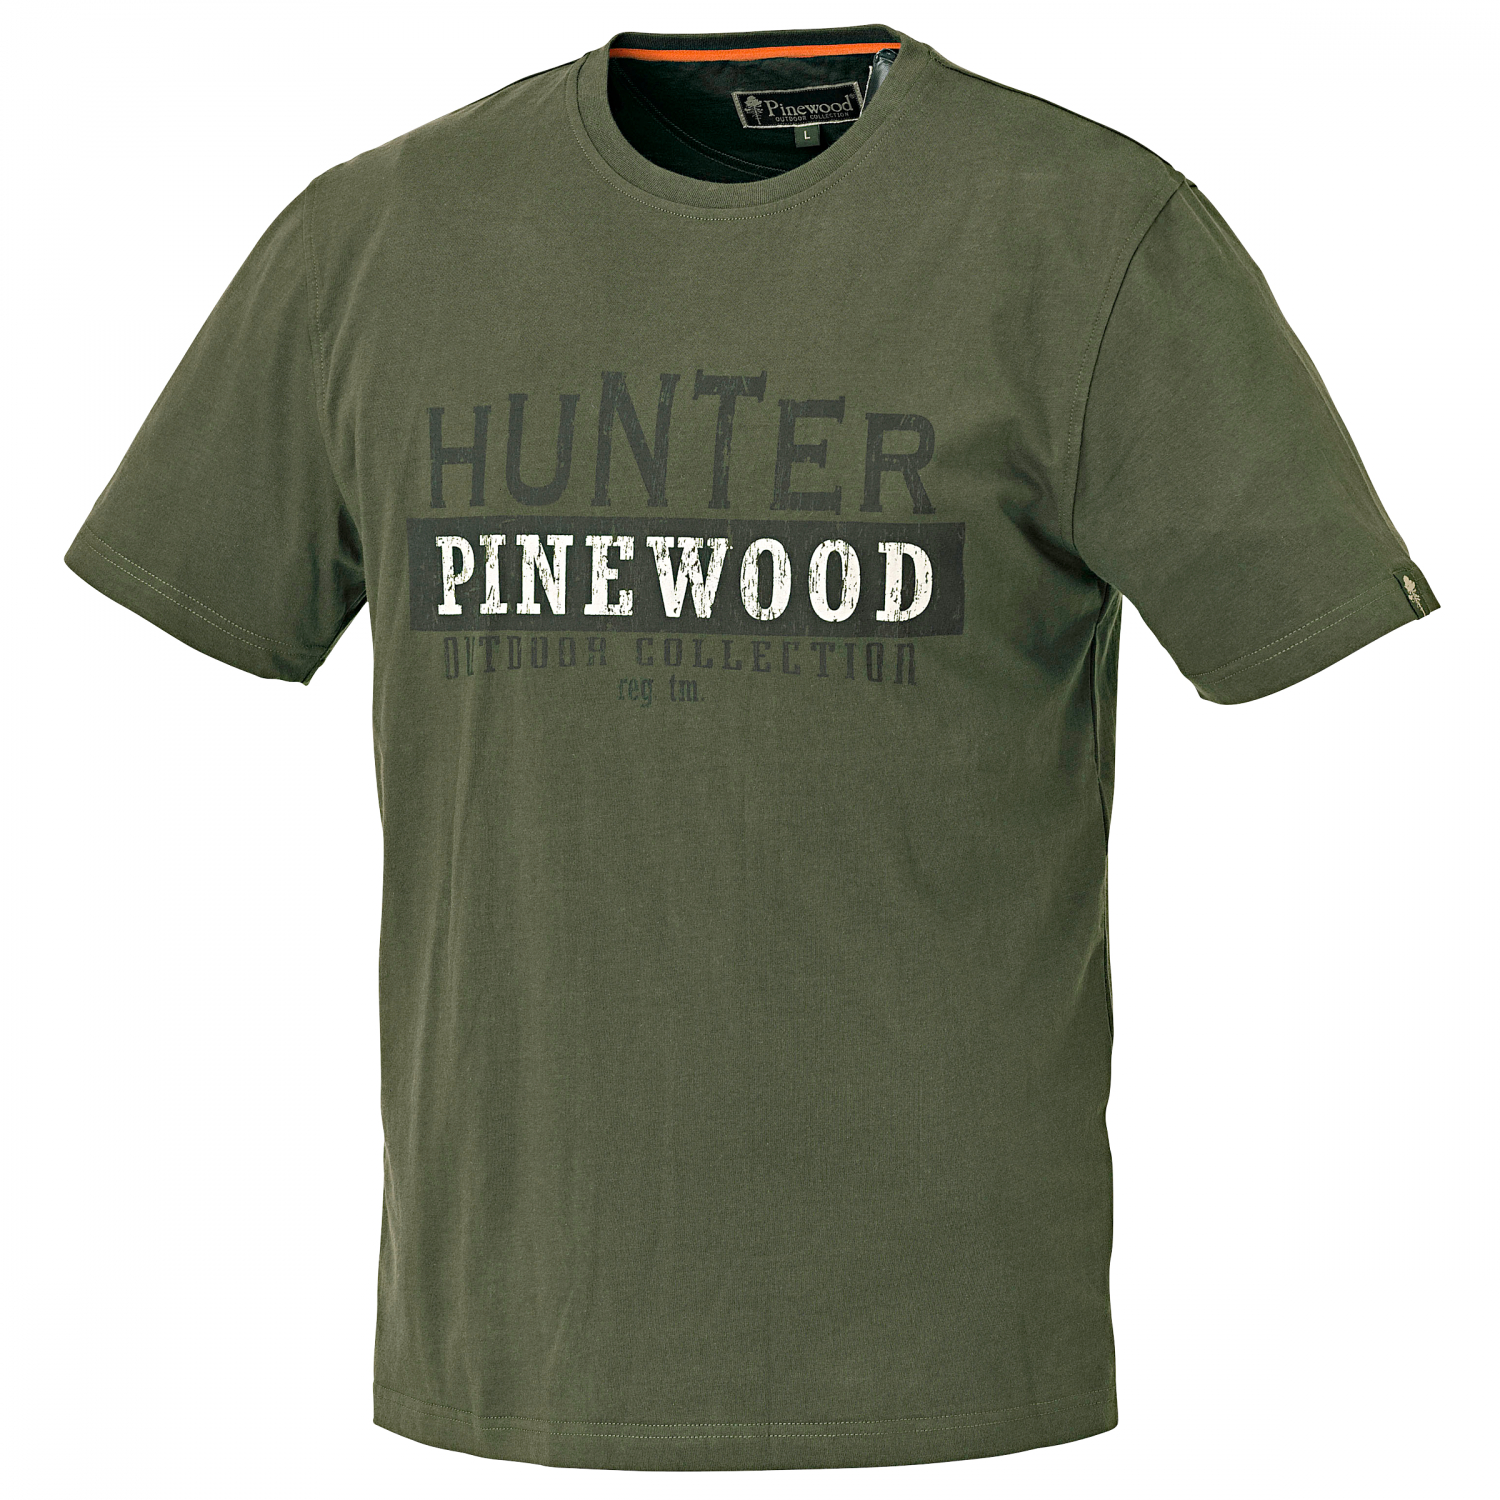 Pinewood Unisex Pinewood T-Shirt HUNTER - green 